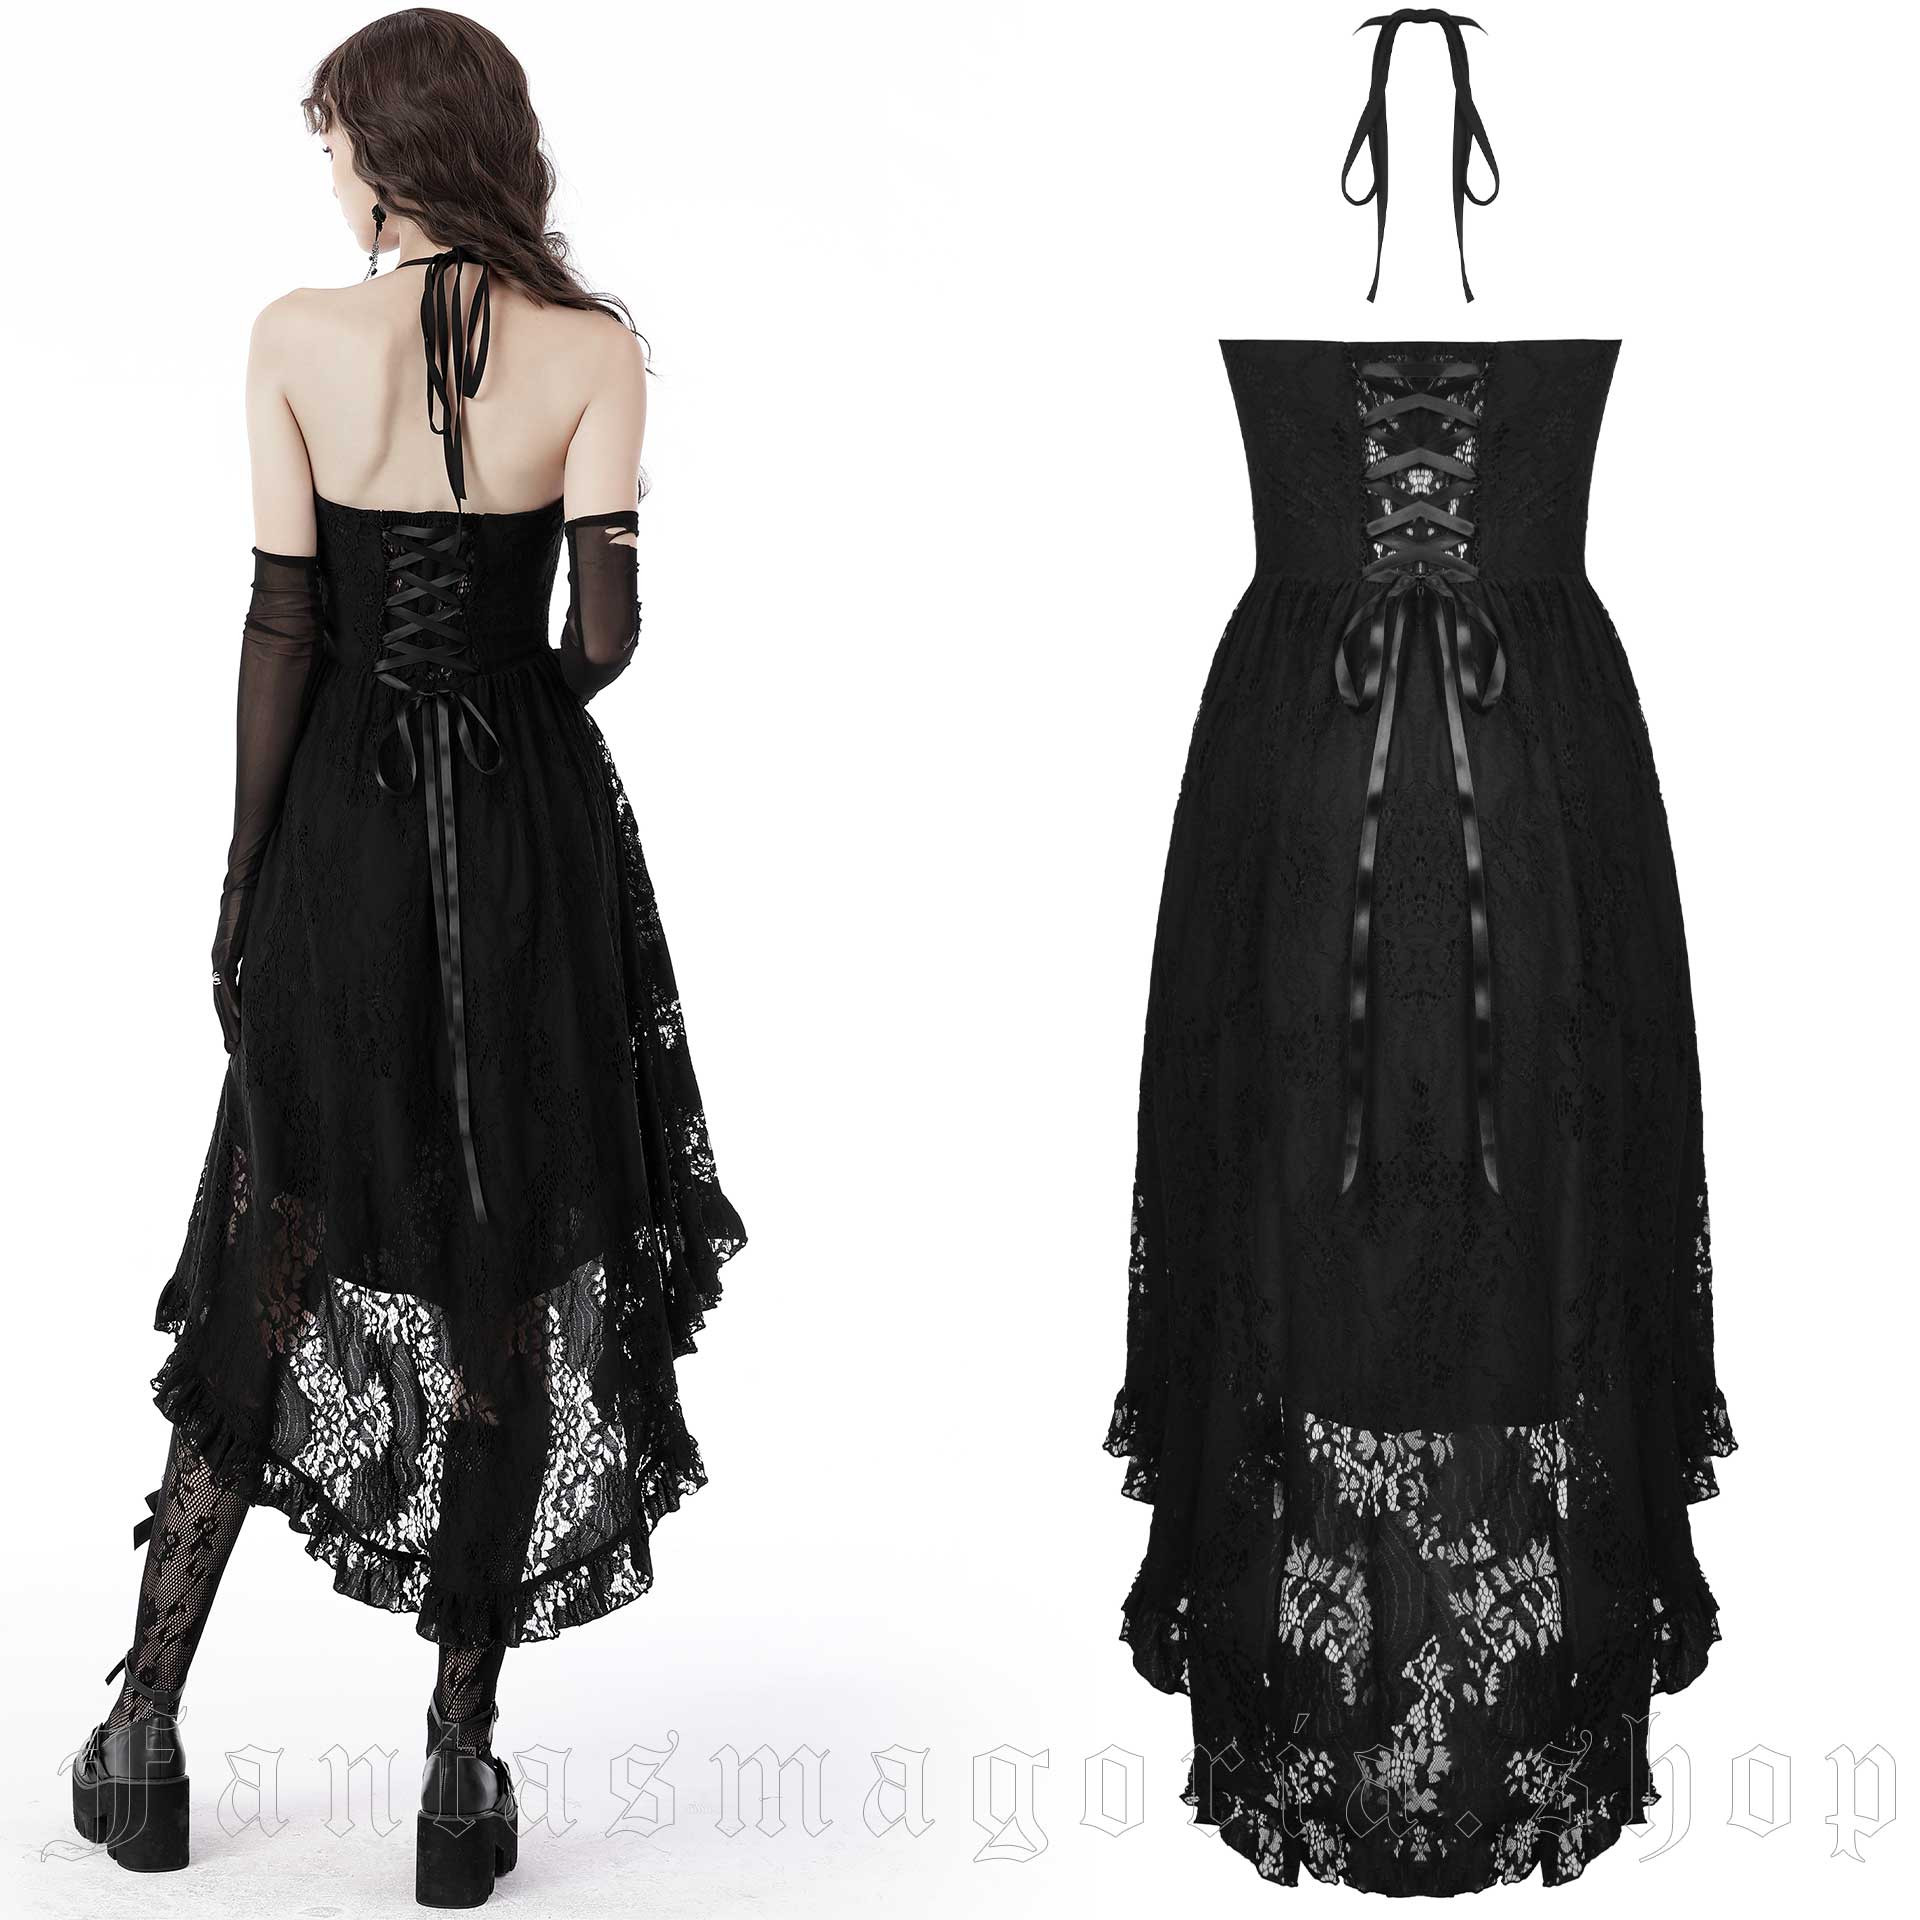 Punk Rock Red Black Tie Dye Witchy Gothic Dress by Dark in Love